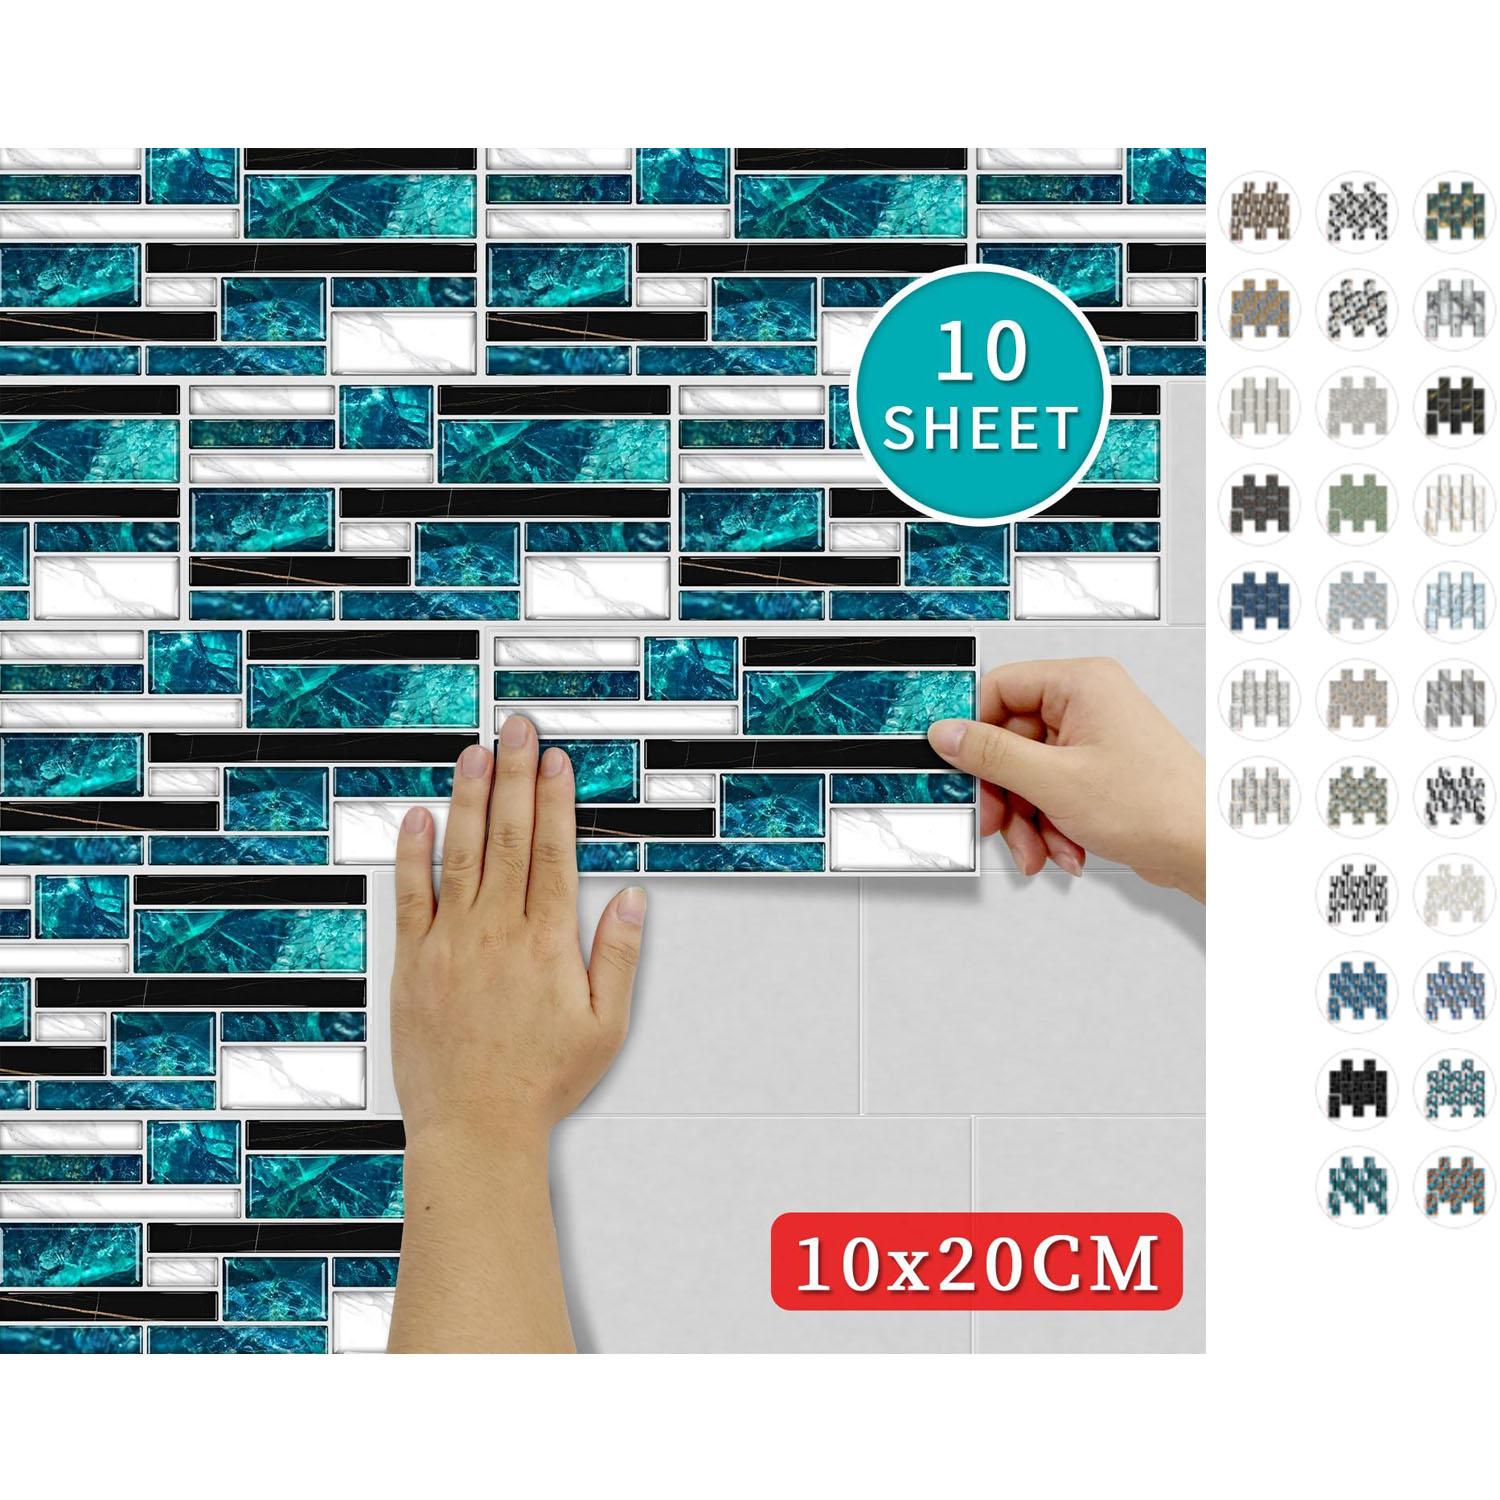 Sticker House Pegatinas de azulejos de pared de cocina impermeables, textura de mosaico de mármol, calcomanías de baño, papel tapiz autoadhesivo a prueba de aceite, 10 Uds.